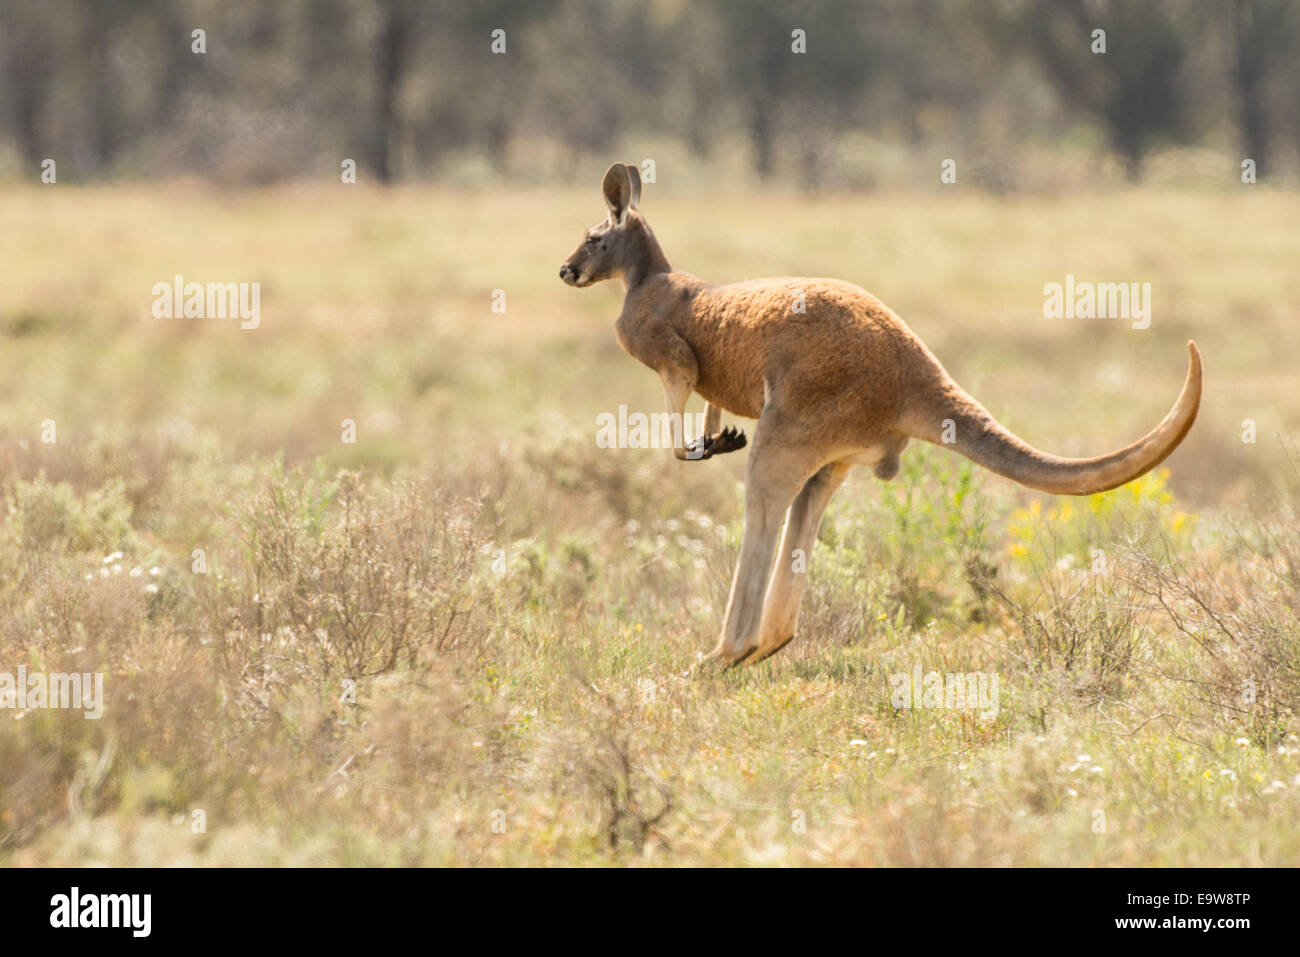 Stock photo of a red kangaroo hopping. Stock Photo